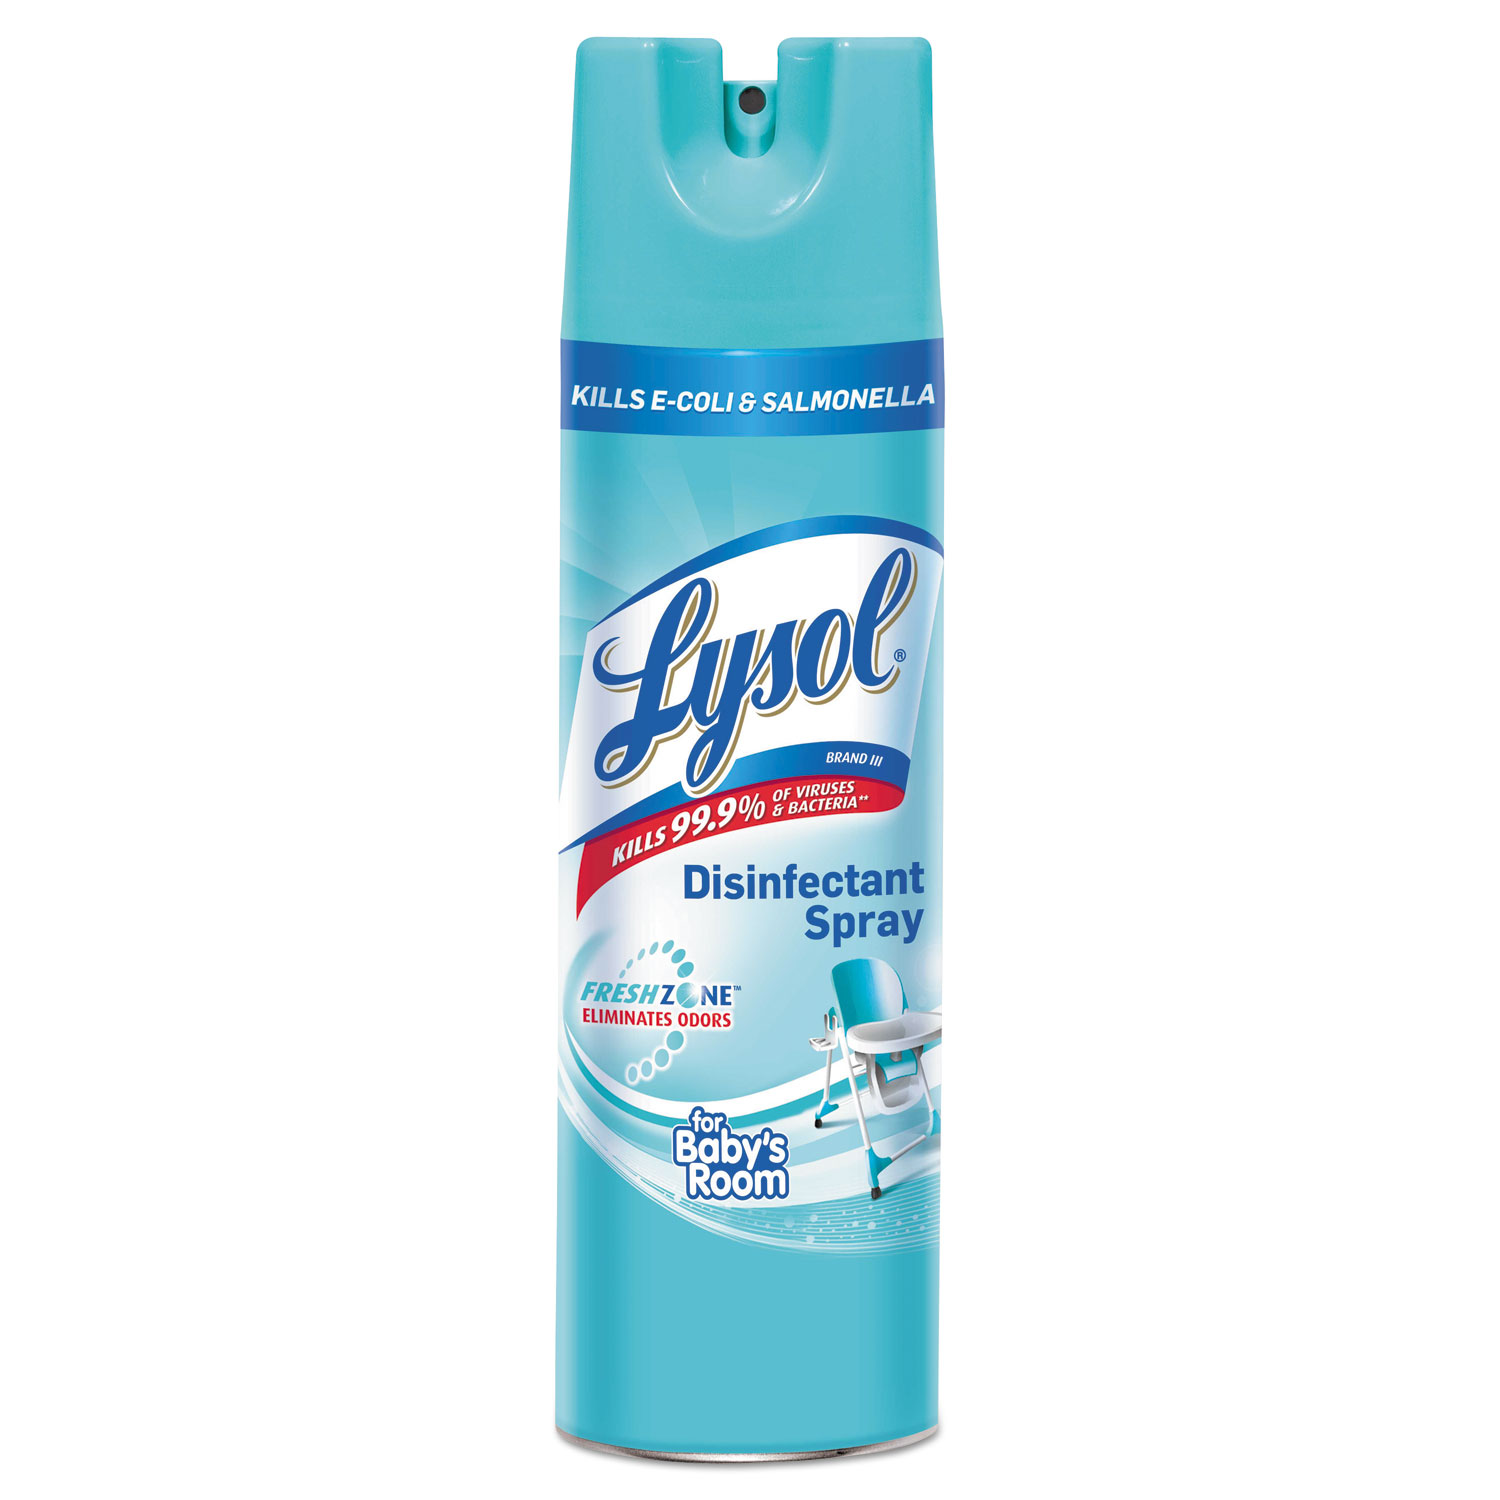 Disinfectant Spray, Babys Room, 19 oz Aerosol Can, 12/Carton